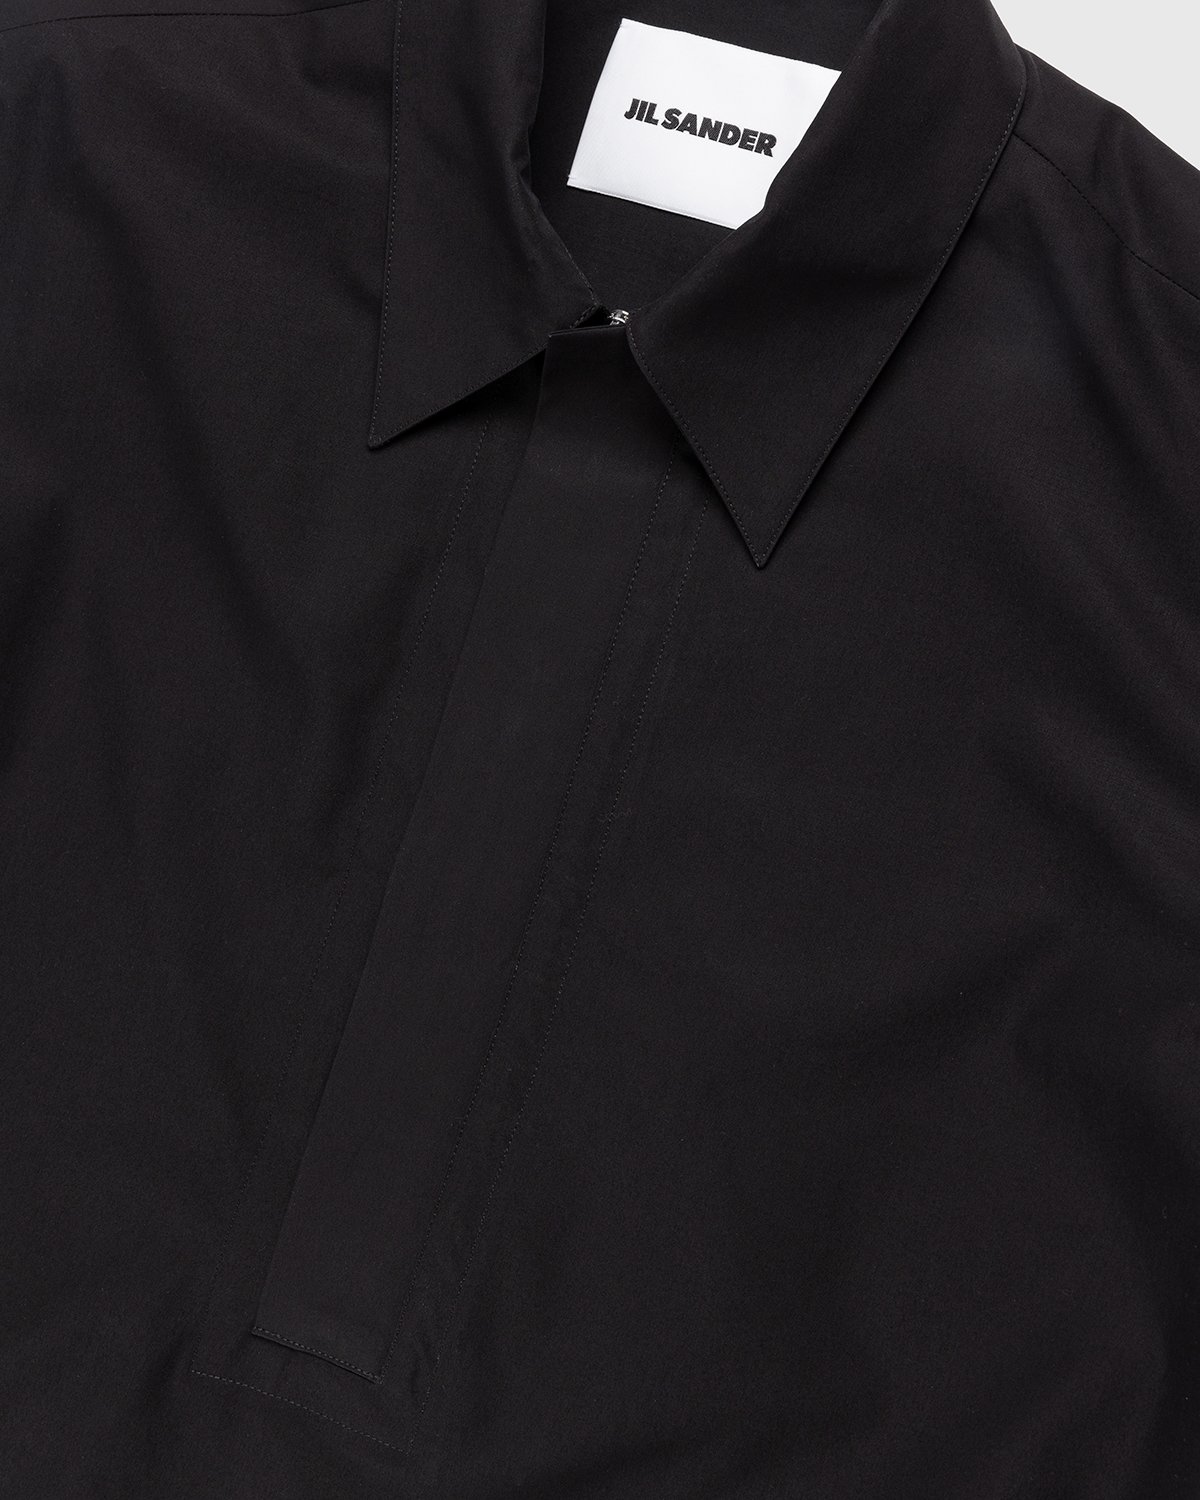 Jil Sander - Two-Tone Diagonal Cut Shirt Black/Green - Clothing - Green - Image 7